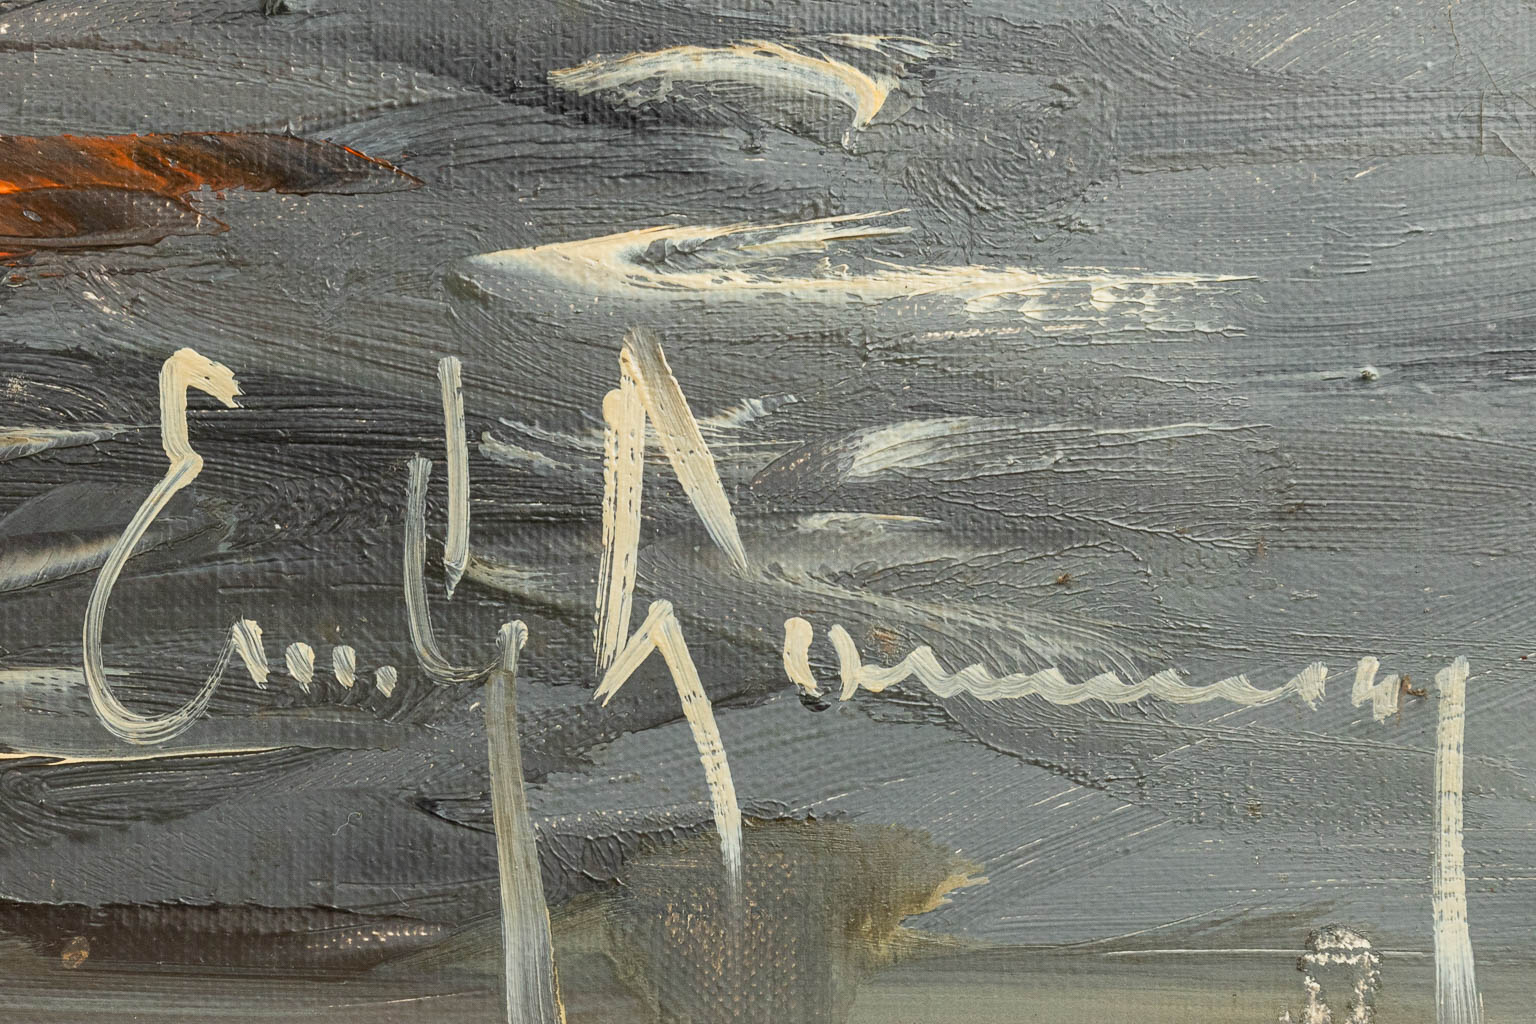 Émile LAMMERS (1914-1990) 'Marine' a painting, oil on canvas. (120 x 80 cm)